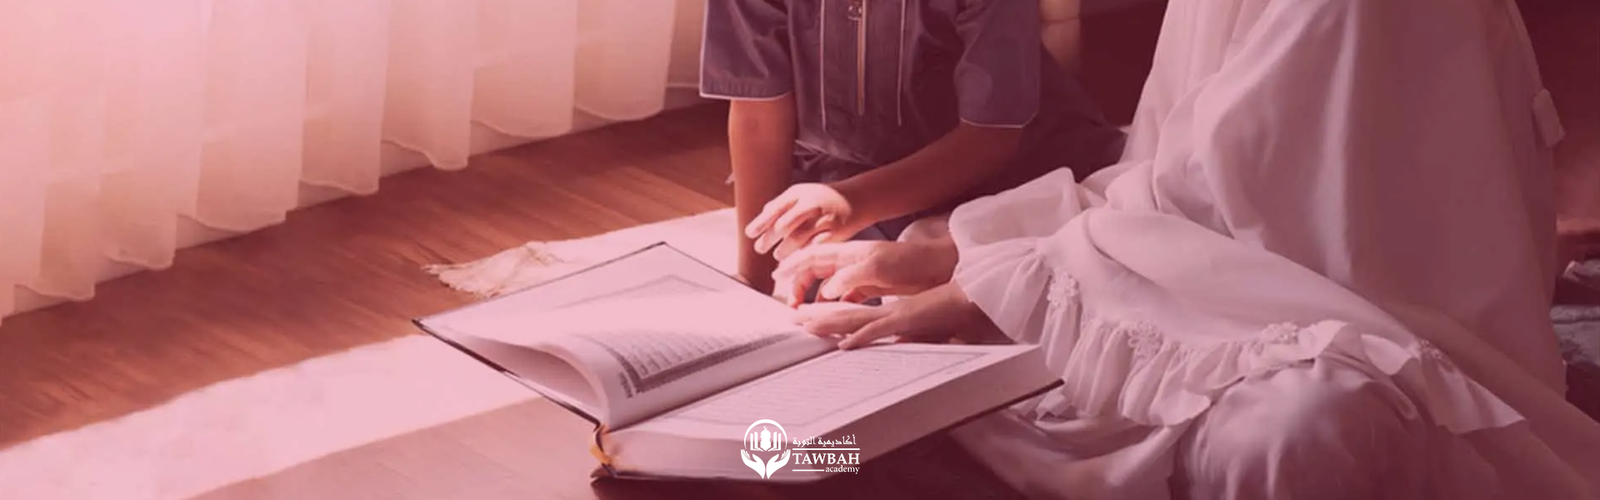 Begin Your Quran Learning Journey: 8 Steps for Kids